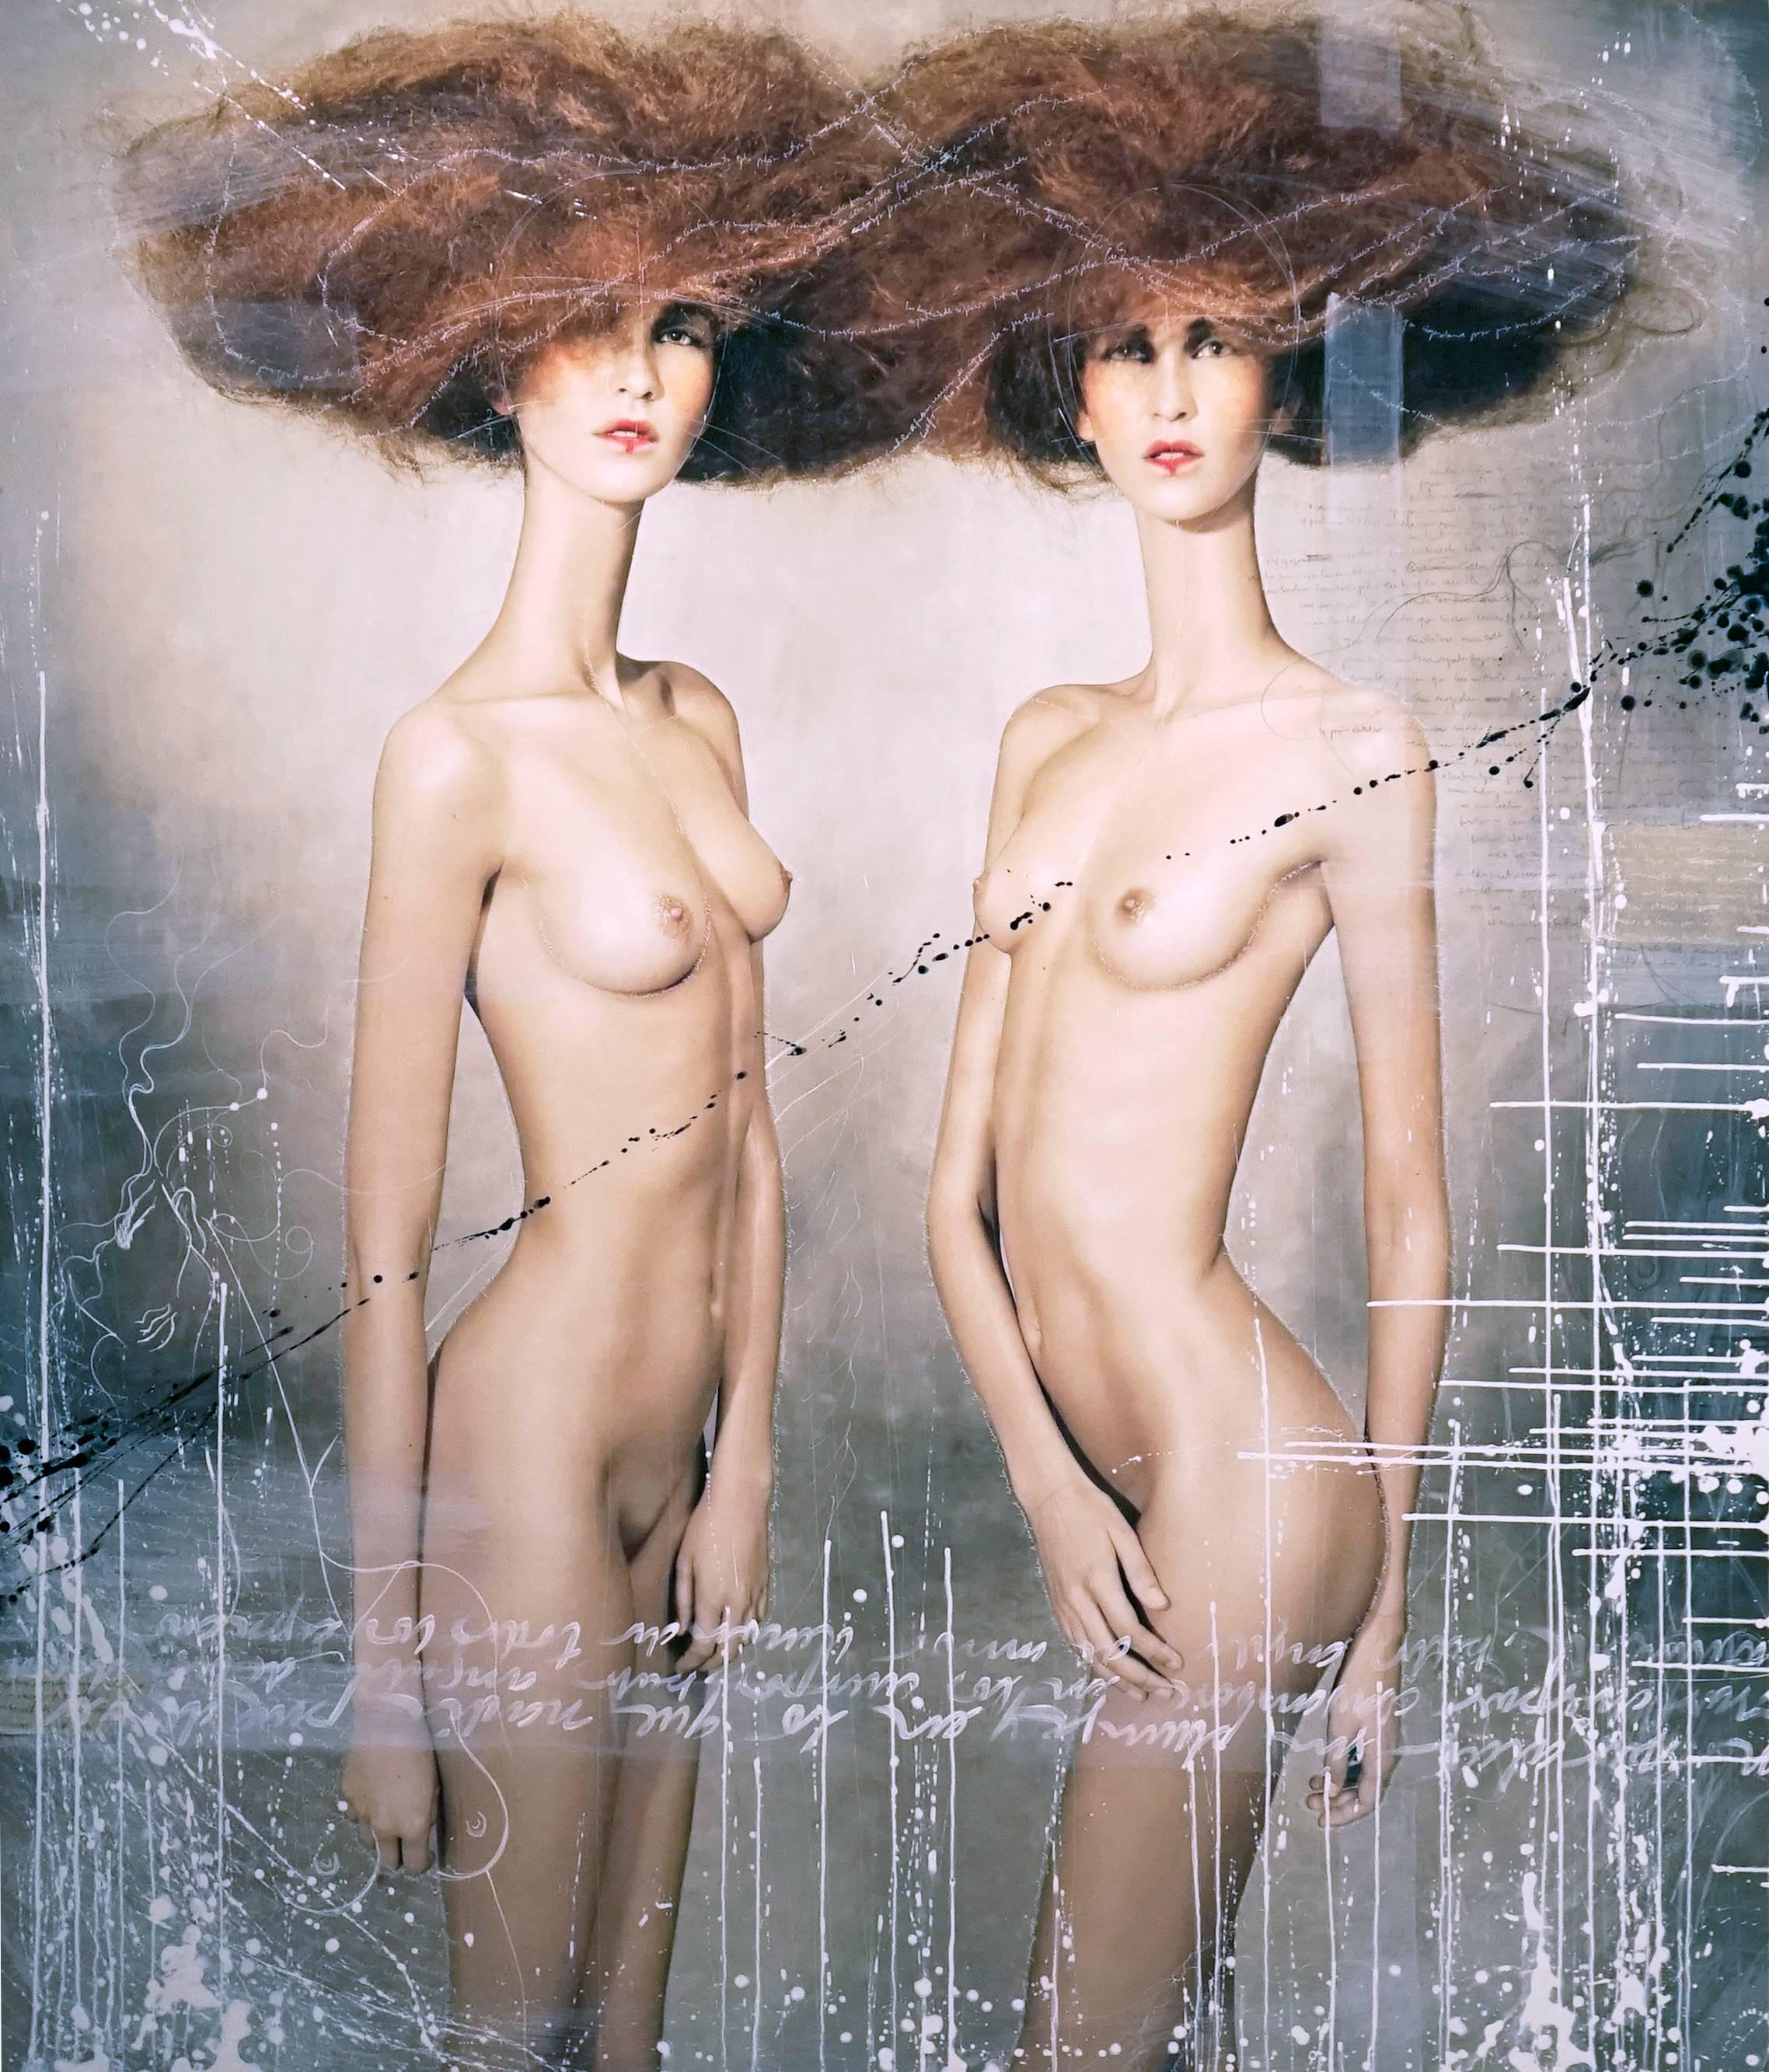 "Twins Naked", 2009 - Mixed Media Art by Efren Isaza